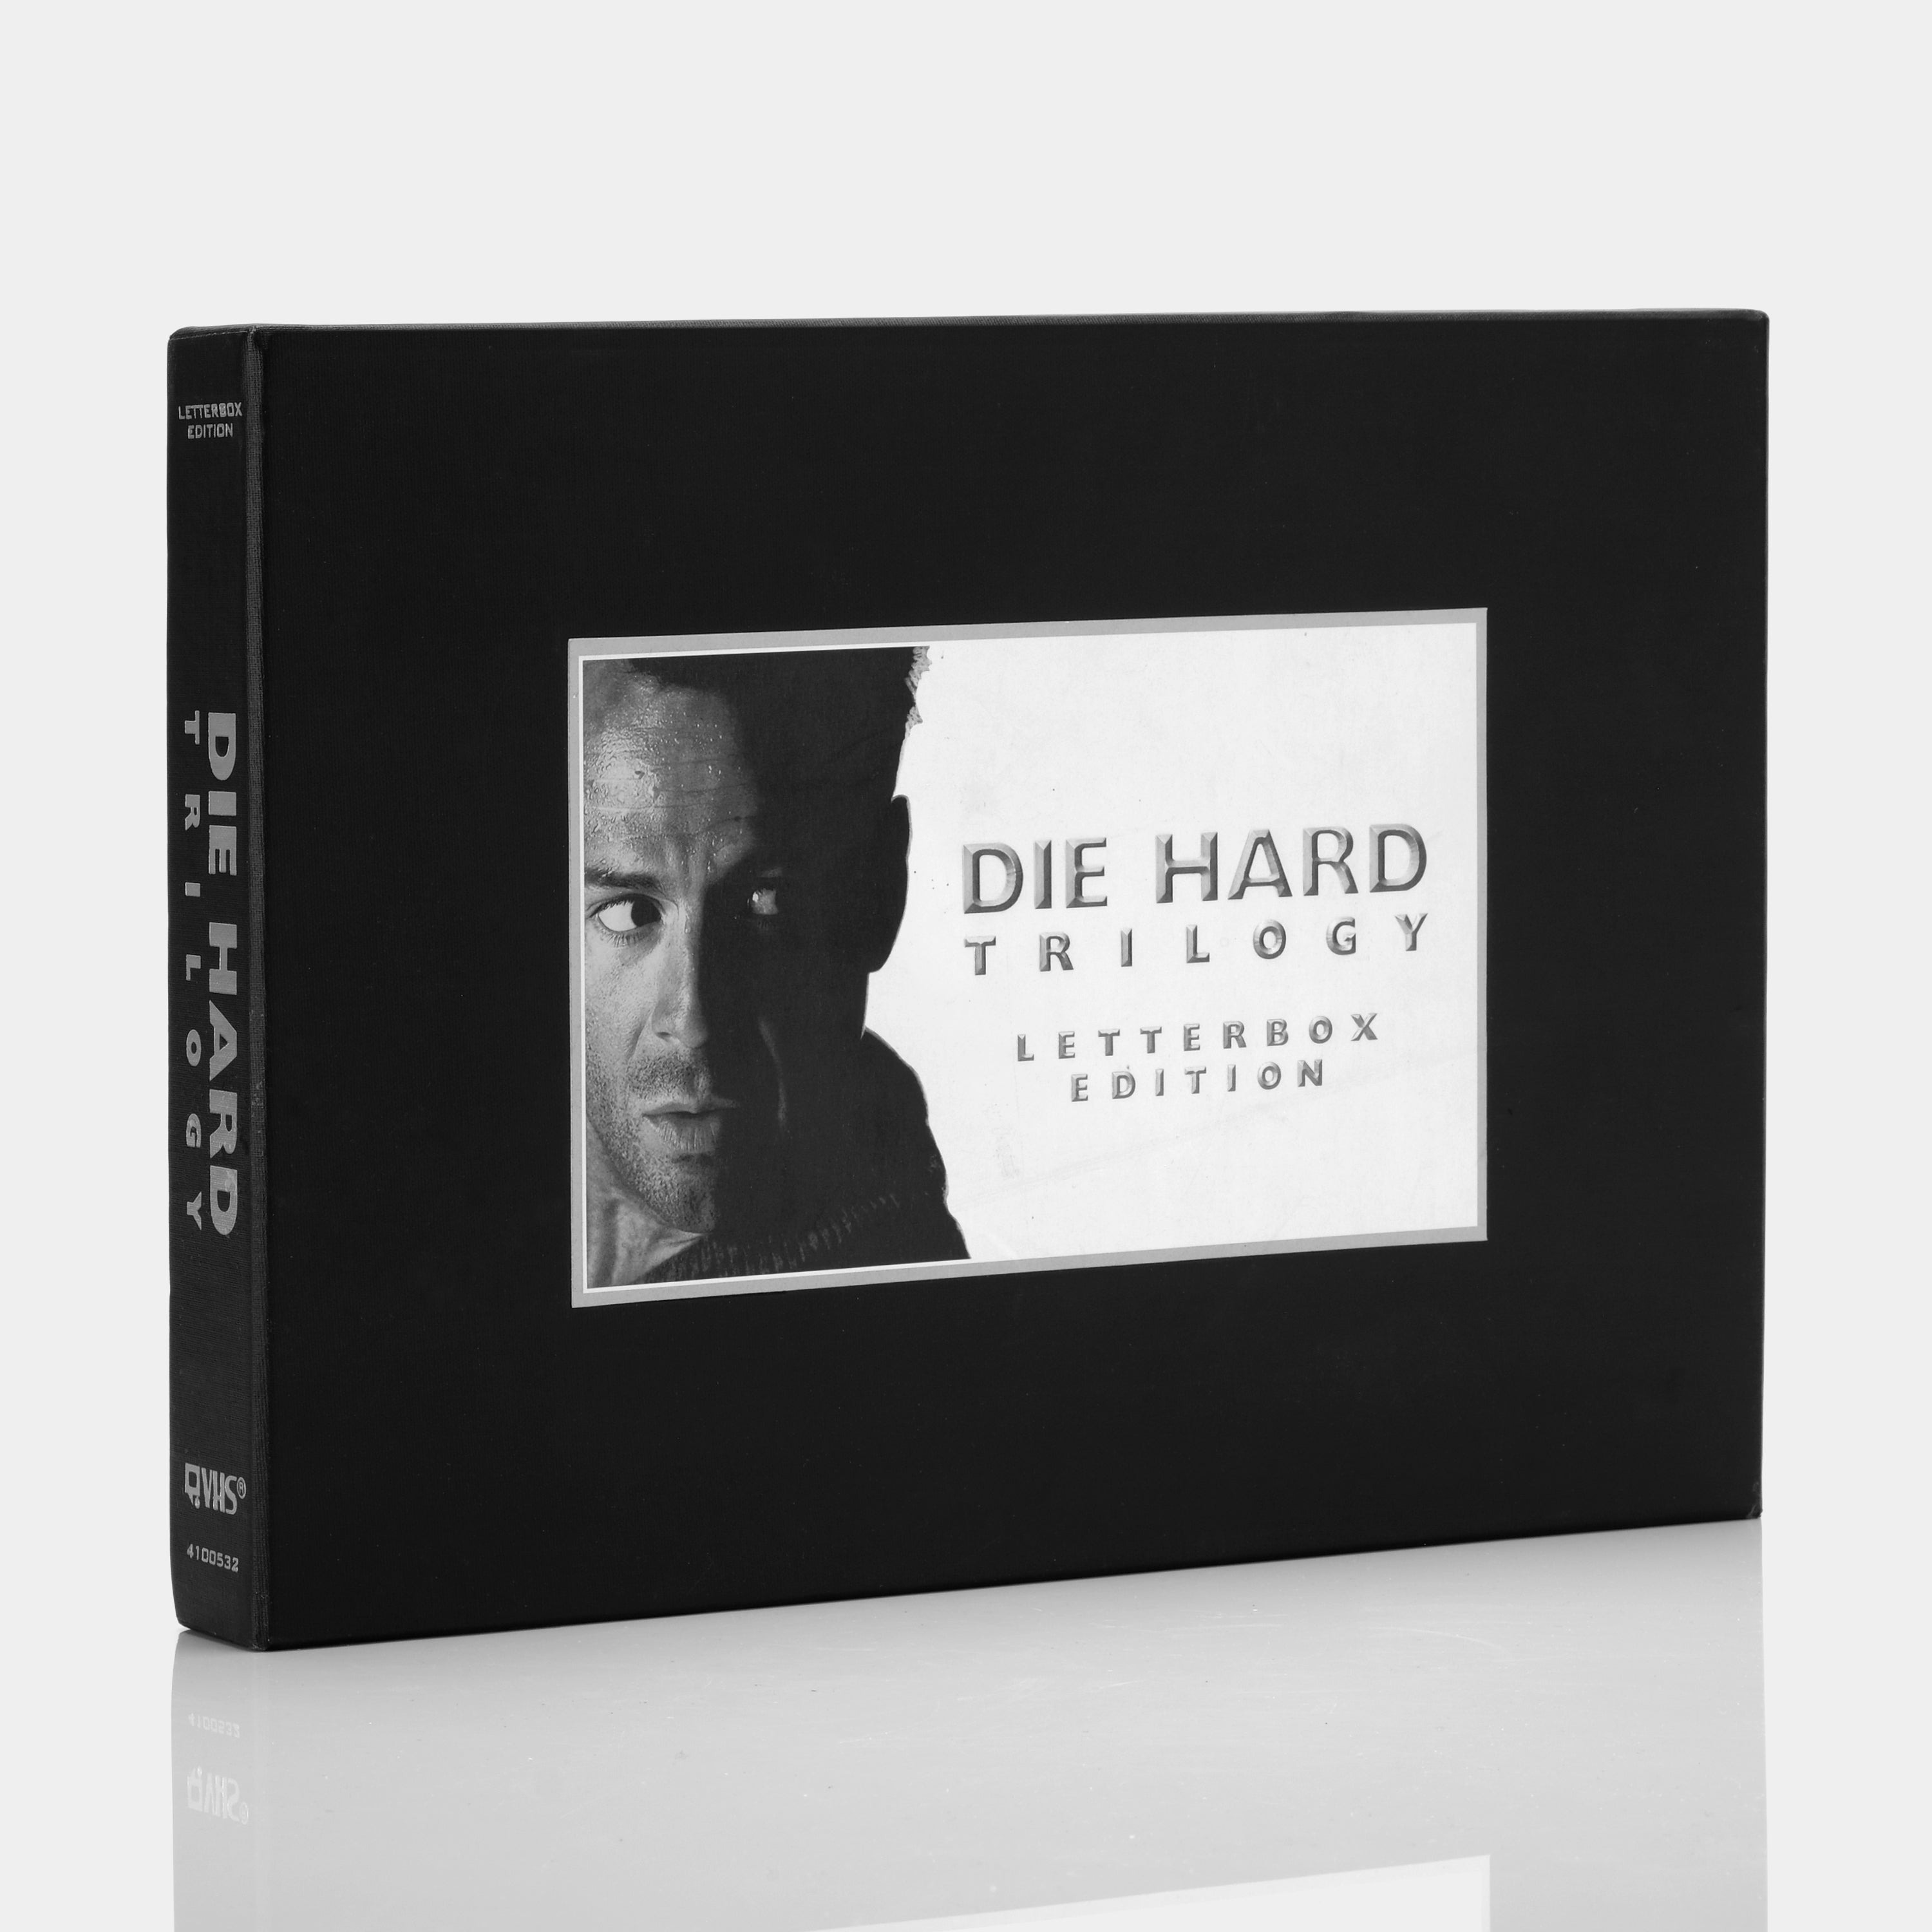 Die Hard Trilogy (Letterbox Edition) VHS Tape Set